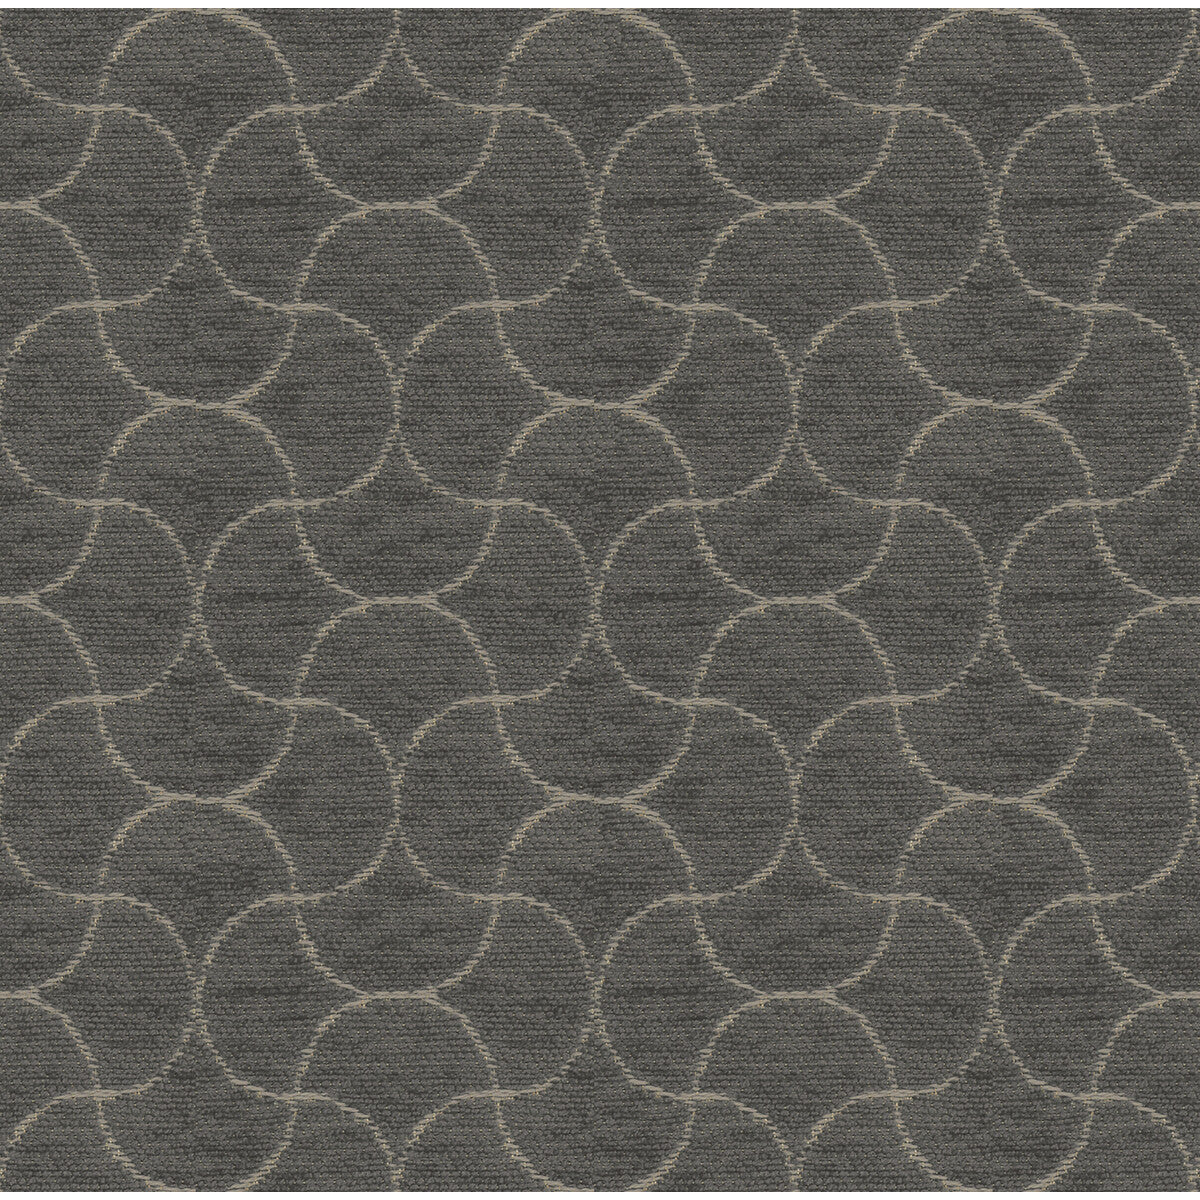 Kravet Smart fabric in 34371-11 color - pattern 34371.11.0 - by Kravet Smart